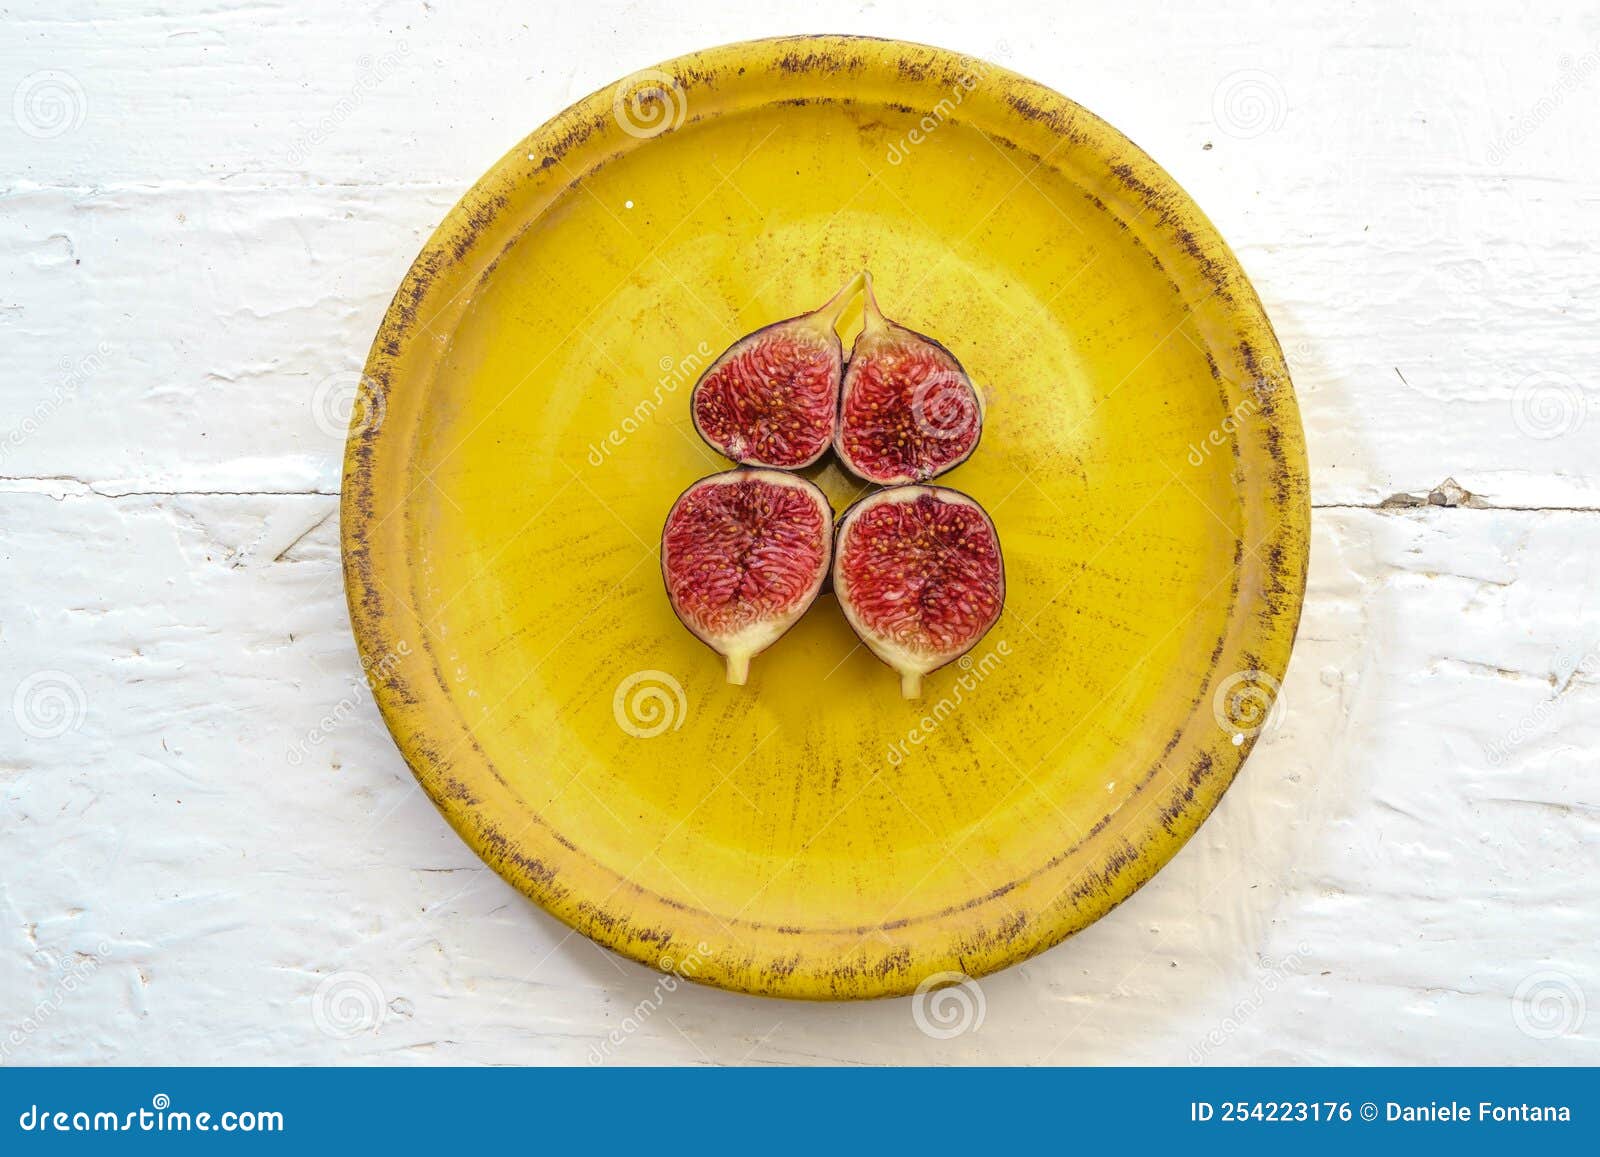 seasonal fruits dark sardinian figs on a vintage yellow plate